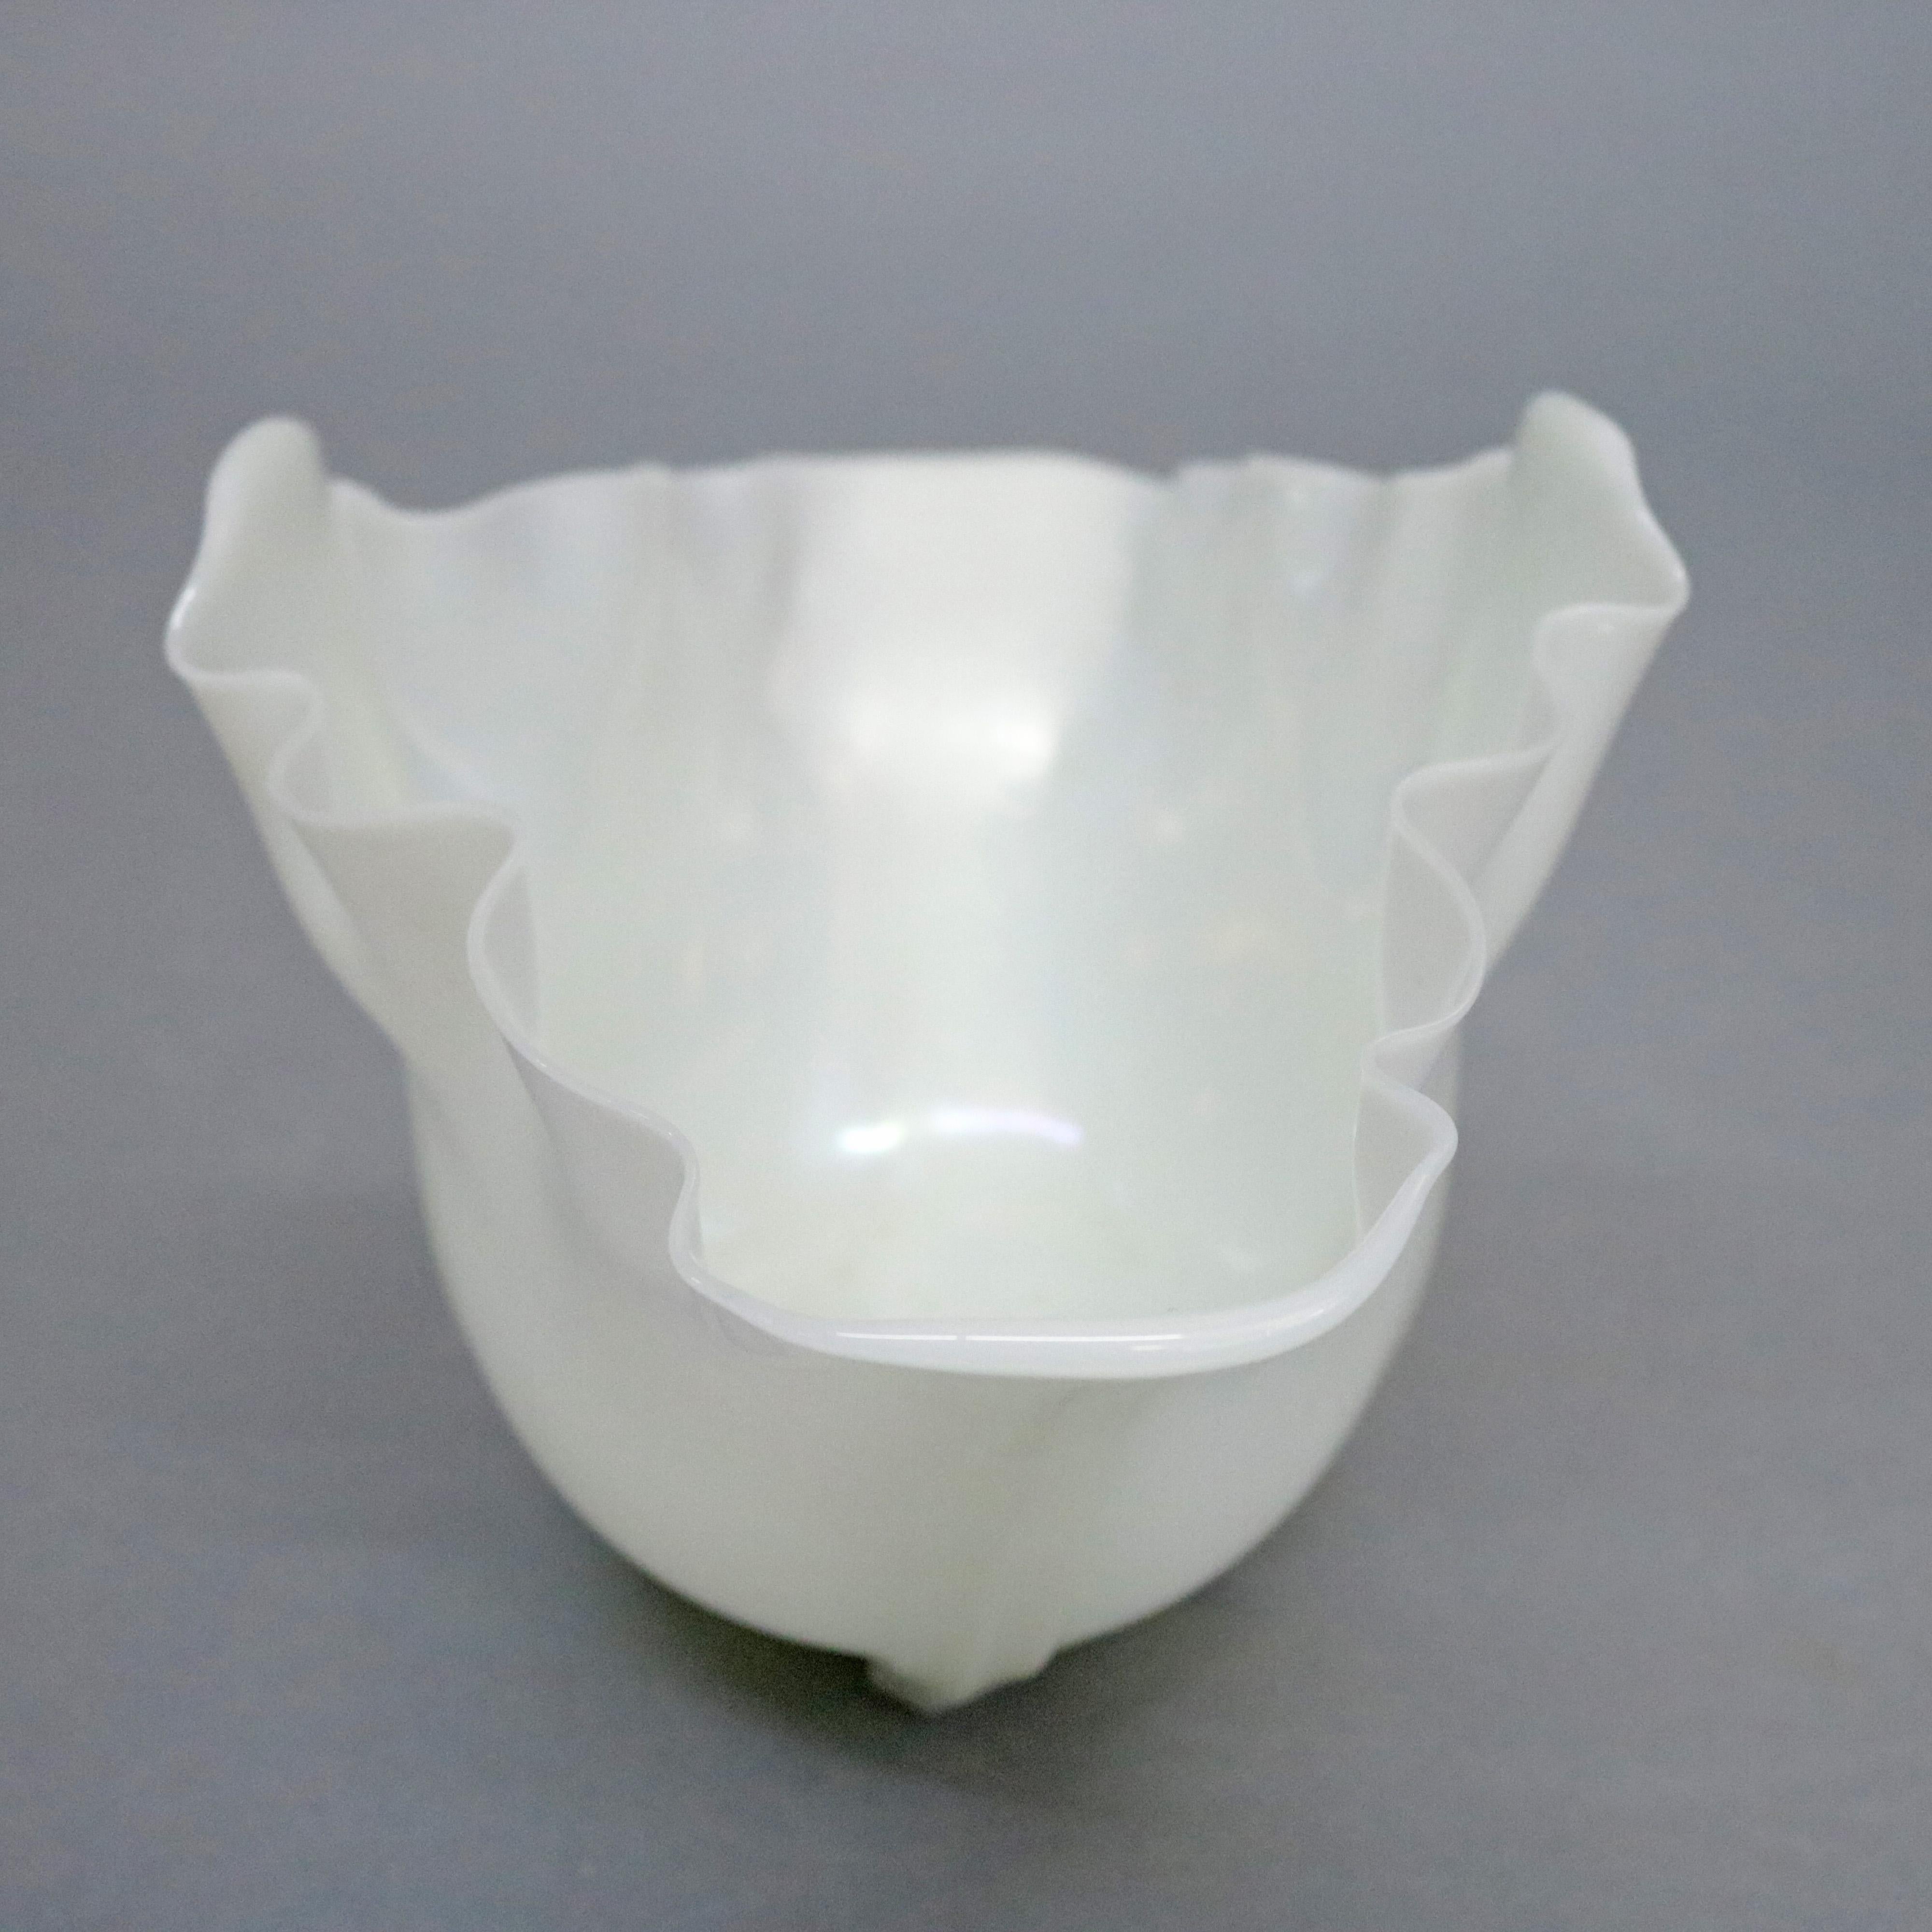 Steuben calcite footed center vase features ruffled handkerchief bowl, original paper label. Measures: 6.5